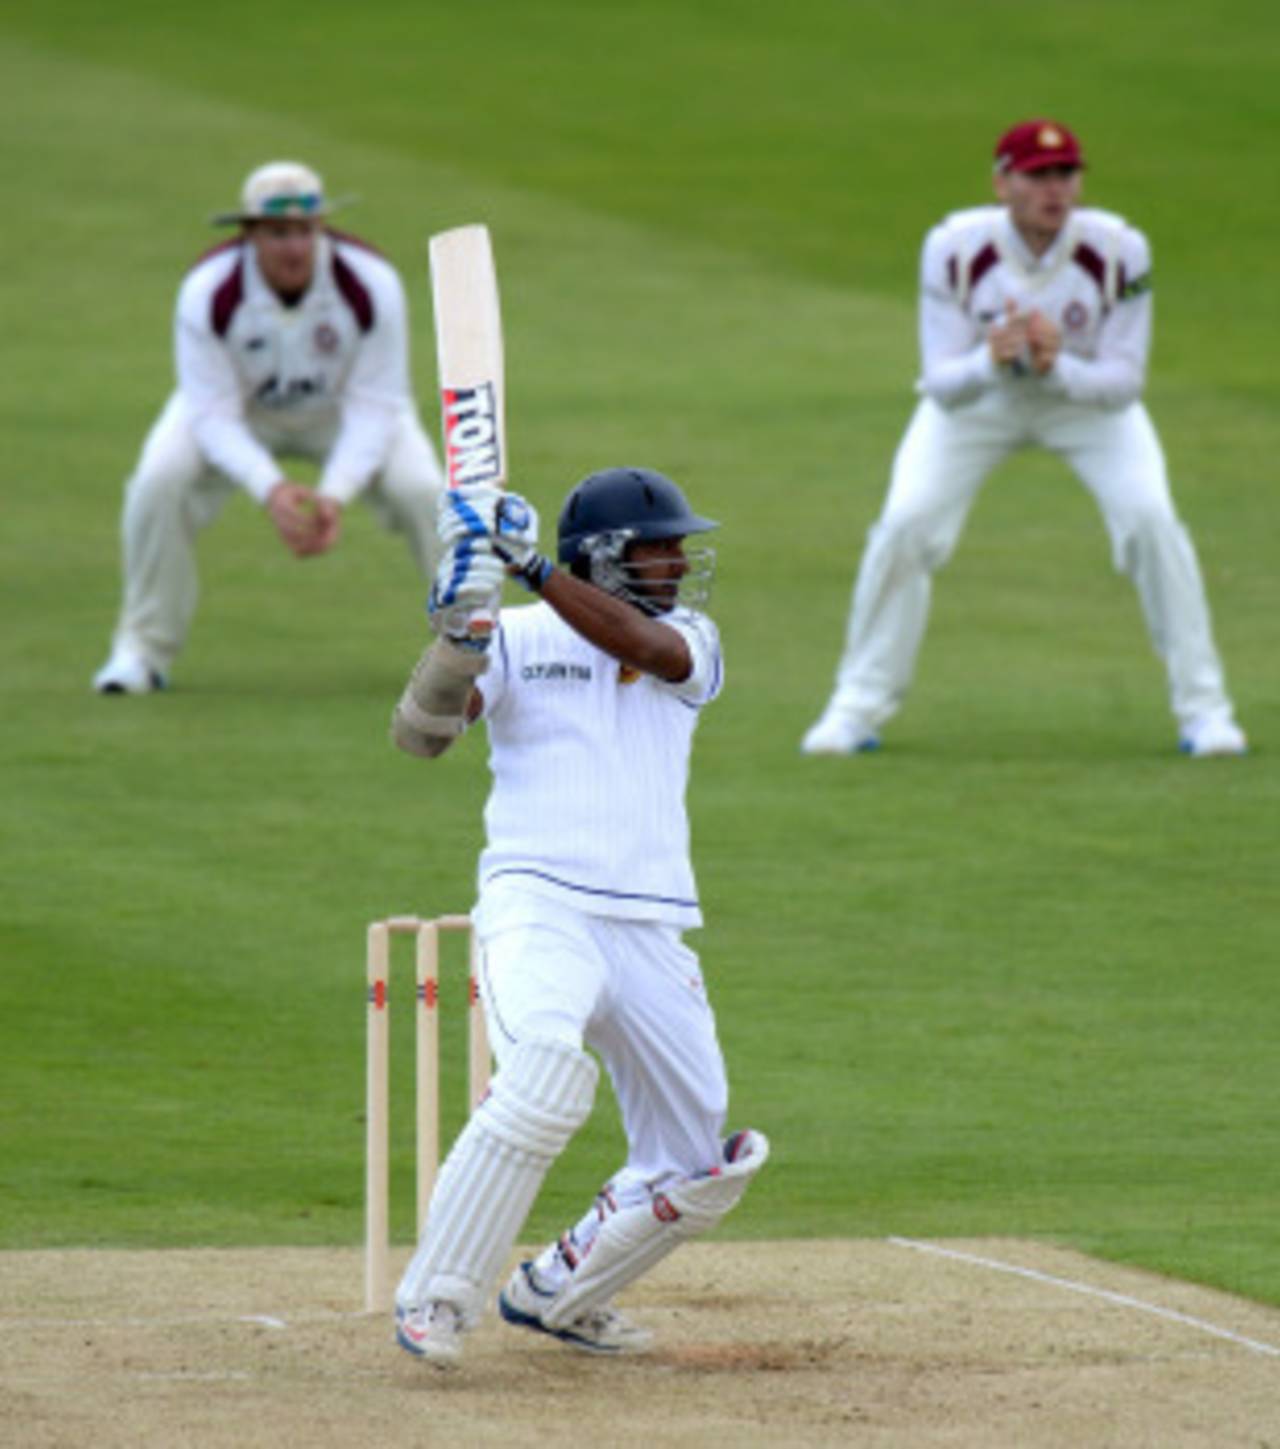 Kumar Sangakkara connects with a square cut, Northamptonshire v Sri Lankans, Tour match, Wantage Road, 1st day, June 5, 2014